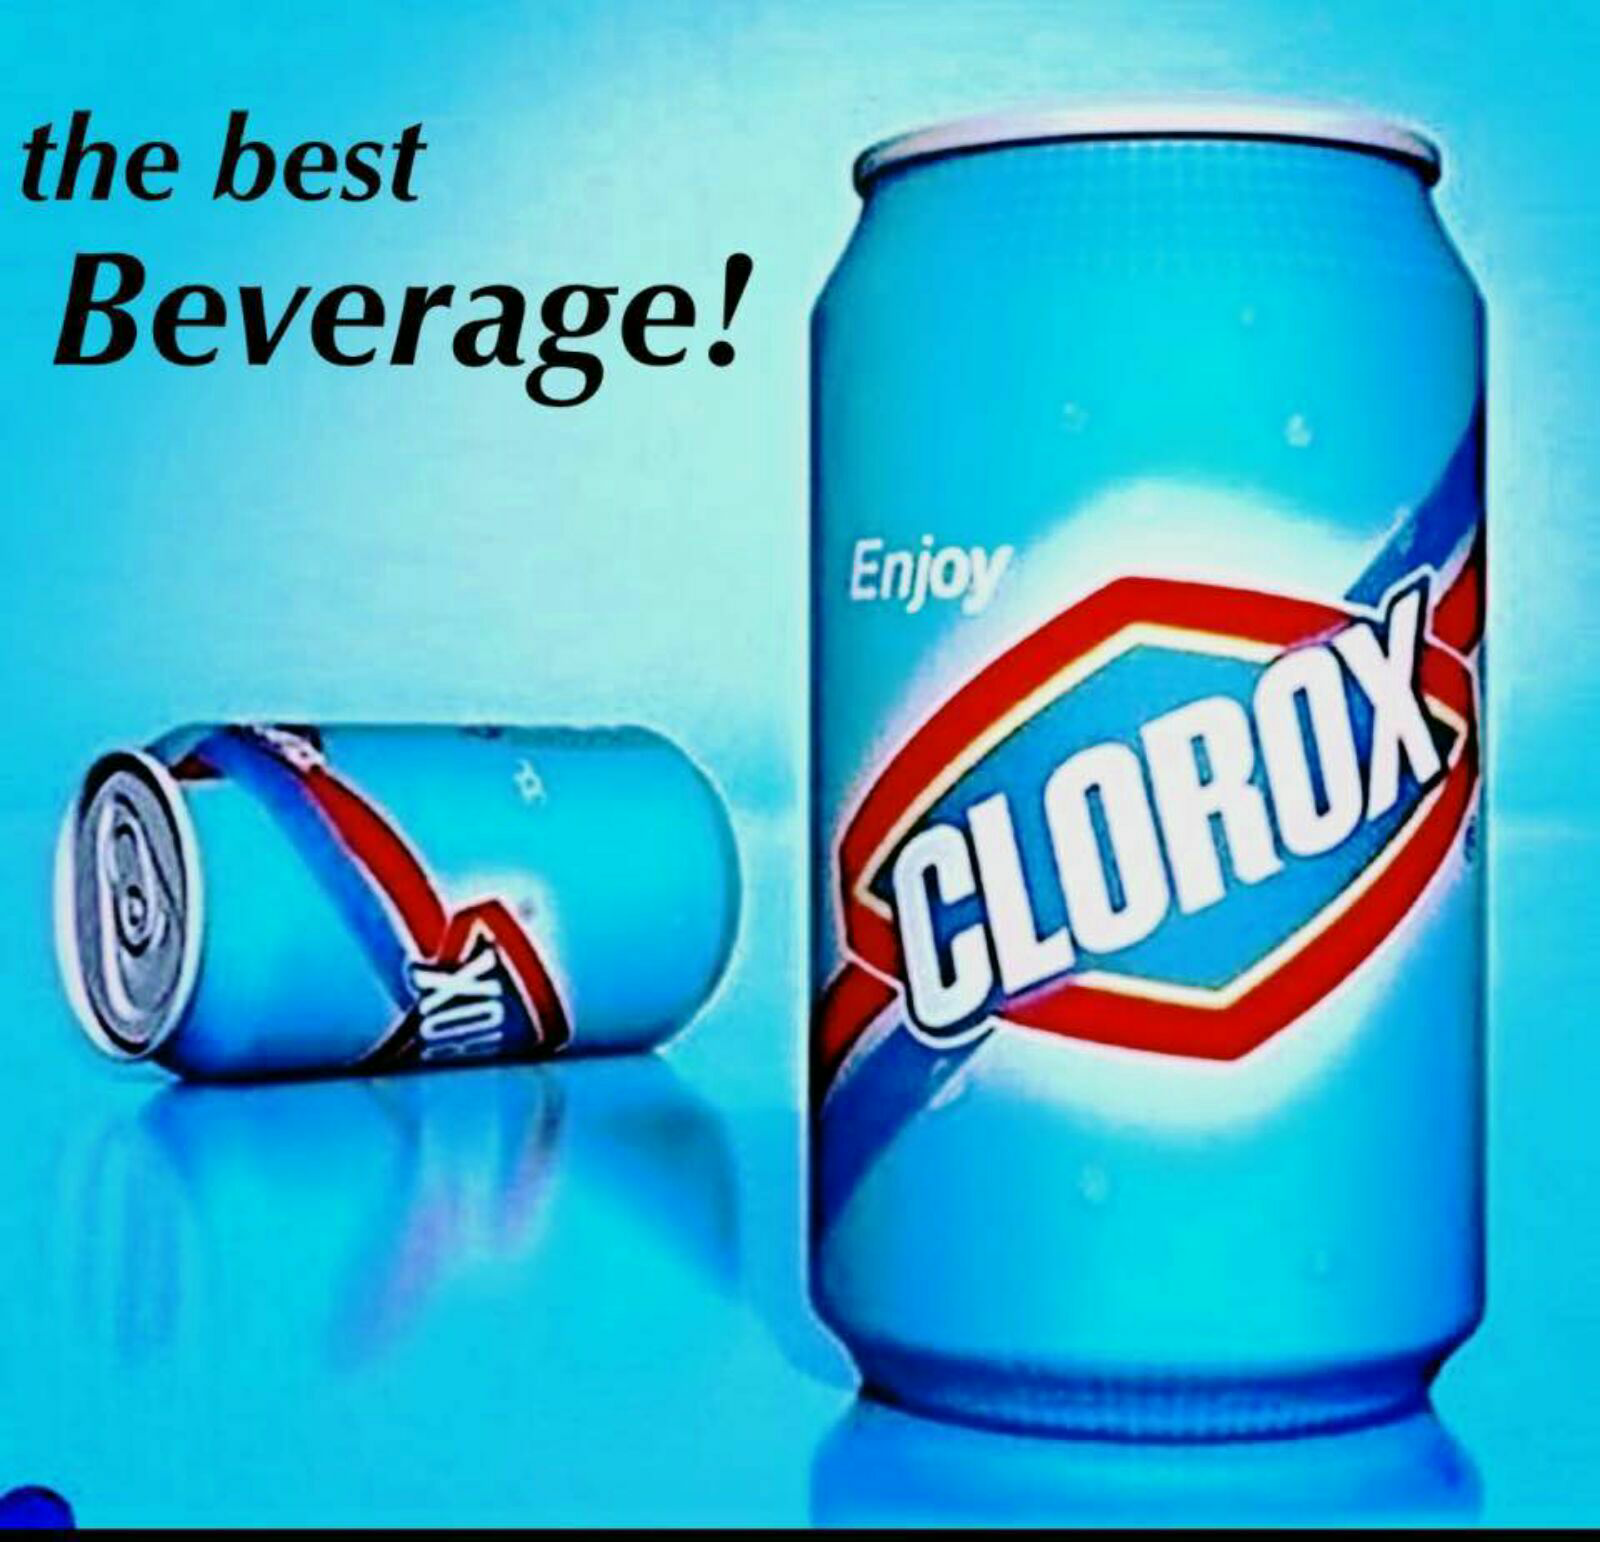 clorox - the best Beverage! Enjoy Co Clorox